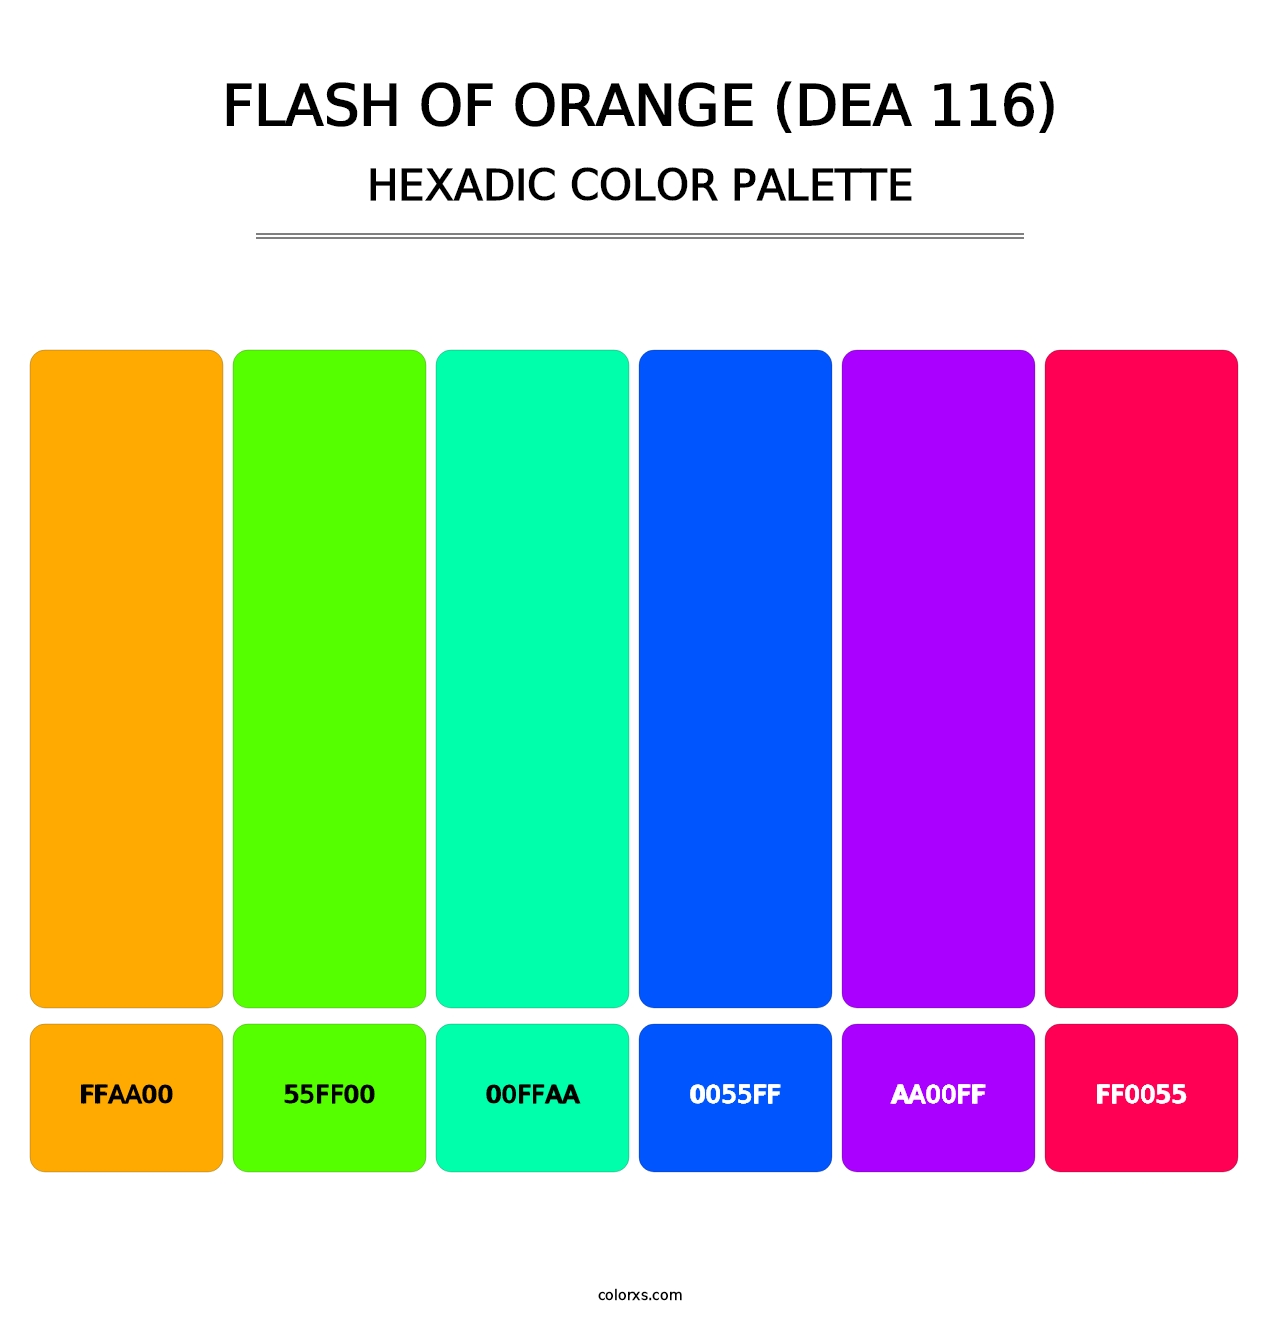 Flash of Orange (DEA 116) - Hexadic Color Palette